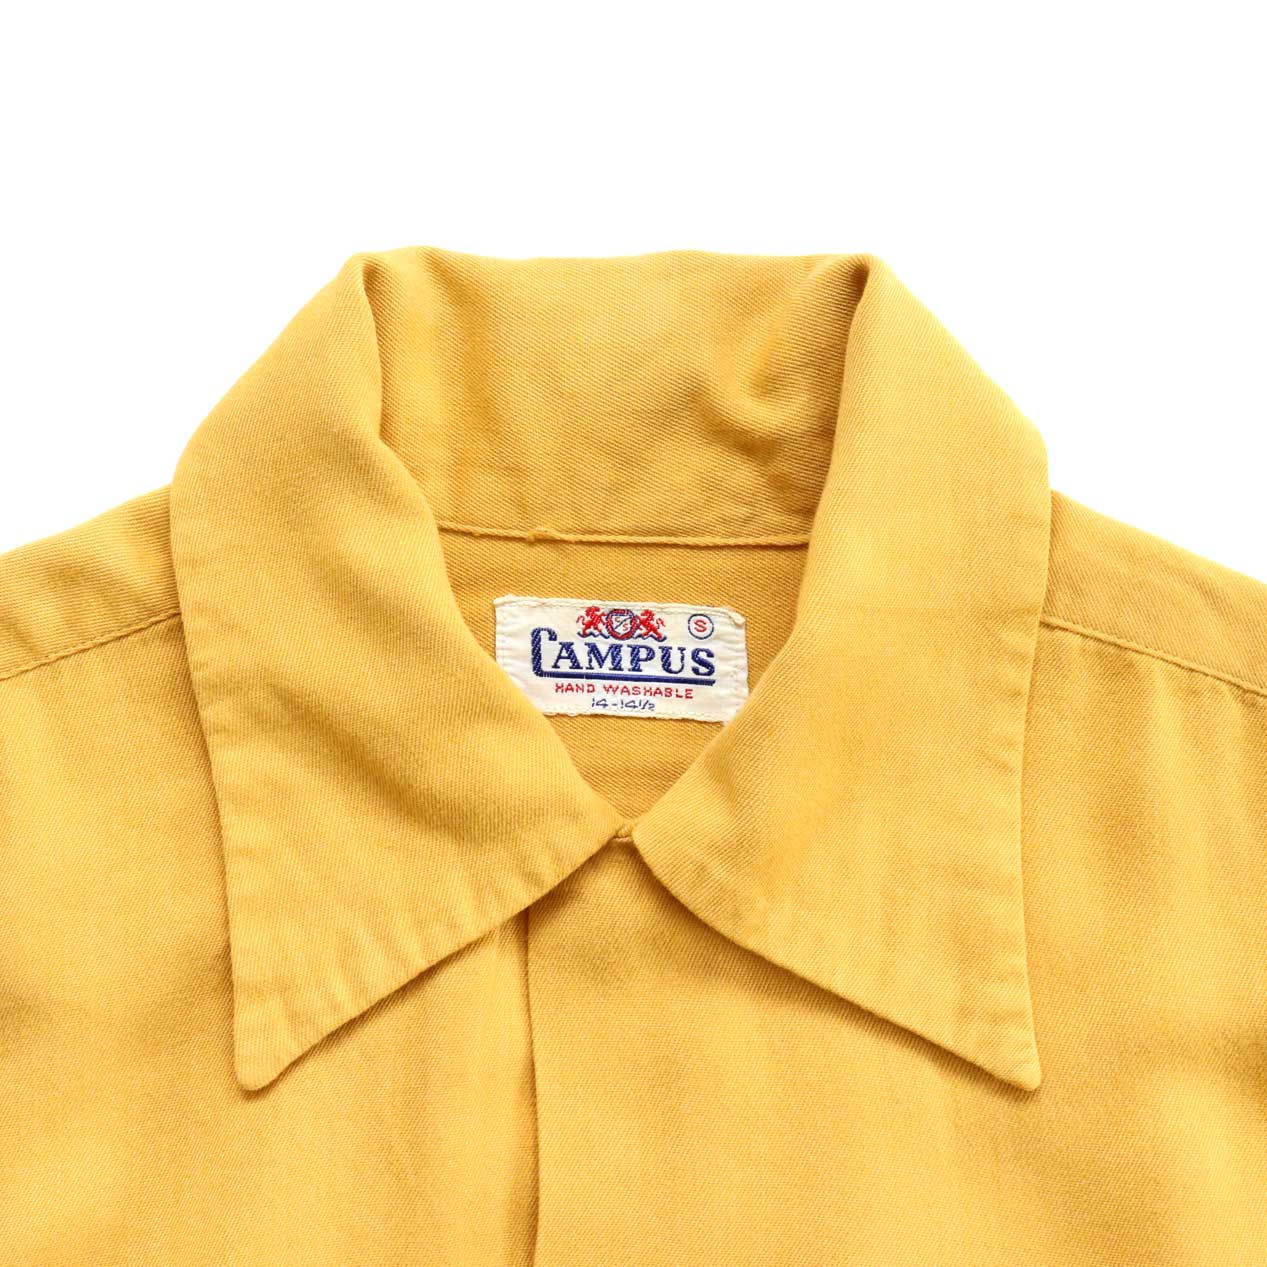 POST JUNK / 50's CAMPUS Rayon Gabardine Shirt